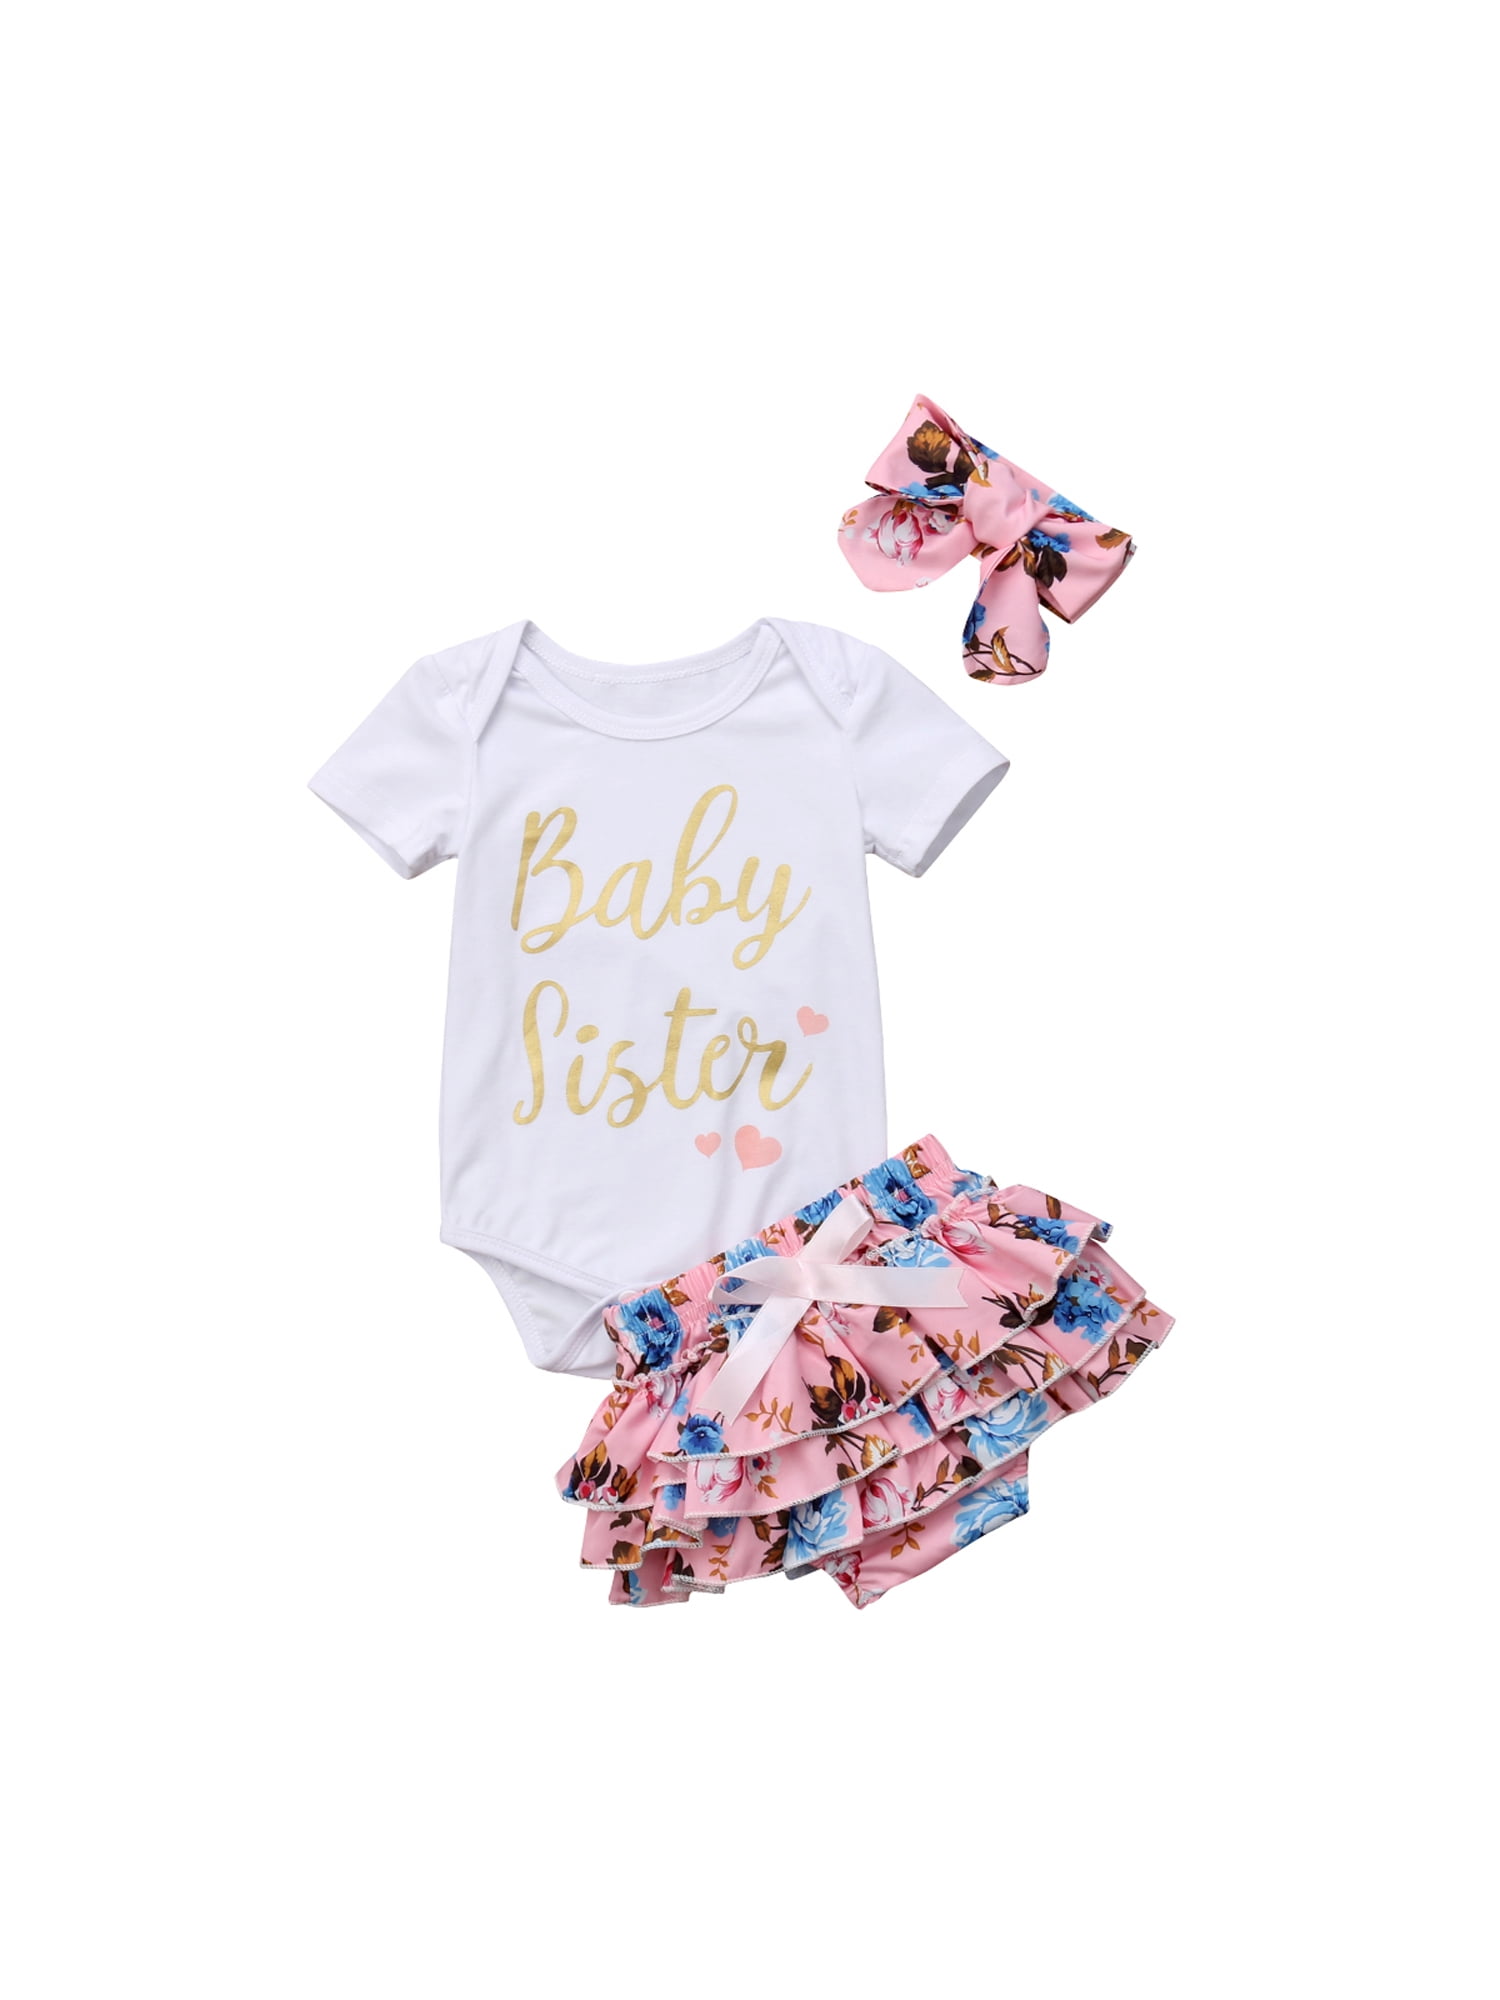 Toddler Infant Baby Girls Outfits Clothes Letter Floral Romper Shorts Pants Set 